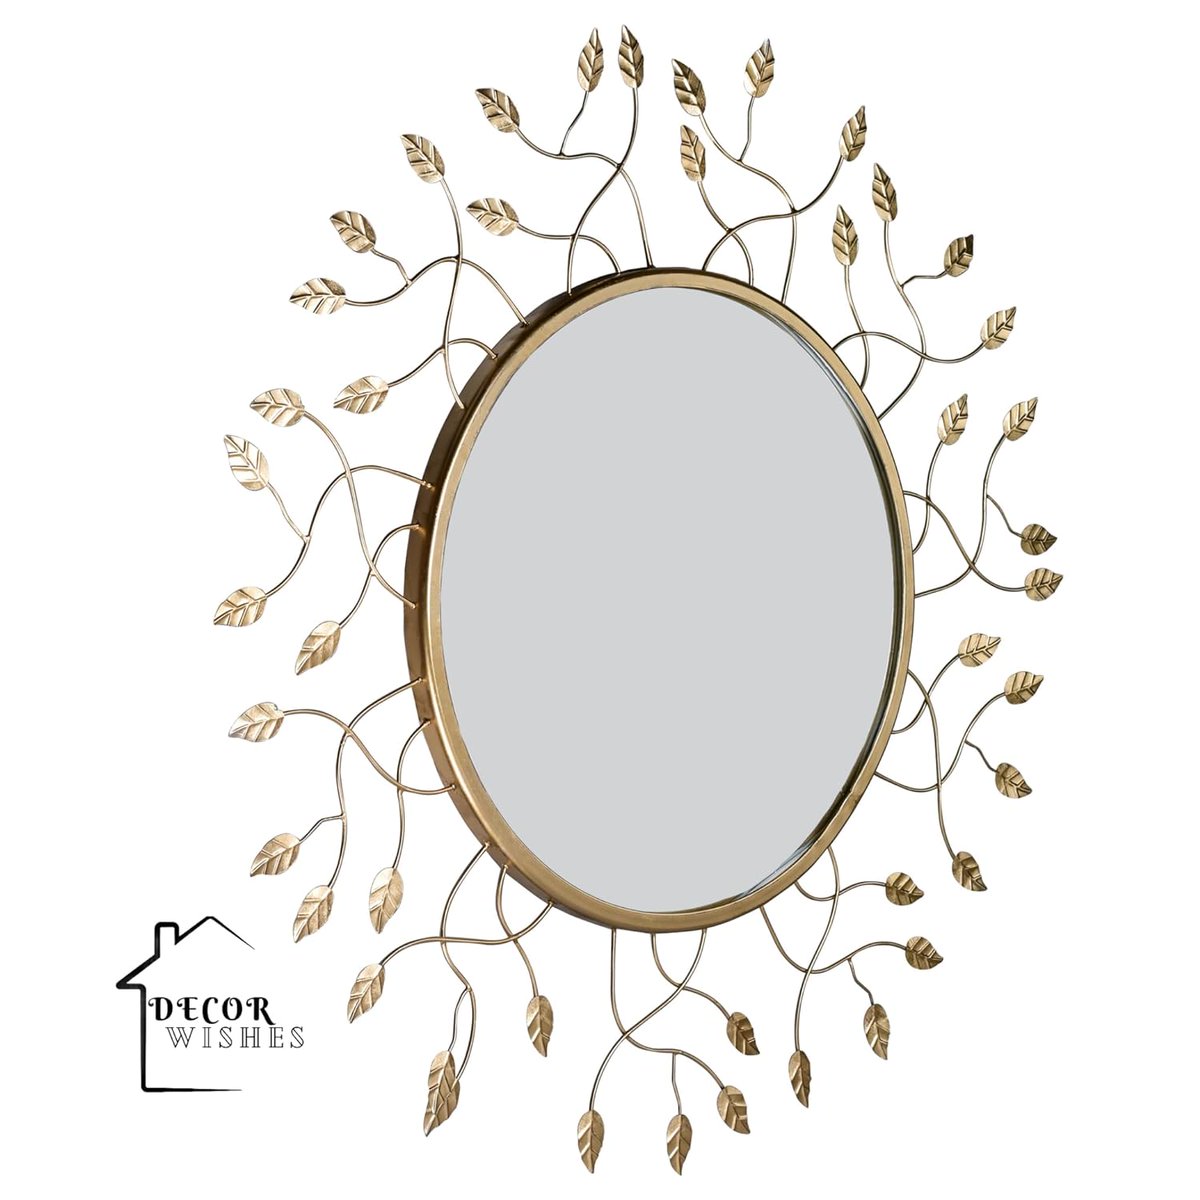 Metal Leaf and Branches Decorative Mirror for @ just ₹3,999/-
.
Order: artycraftz.com/product/leaf-a…
.
.
.
.
.
#artycraftz #art #craft #handmade #walldecor #metalart #homdecor #officedecor #wallmirror #Shopping #offers #discountcodes